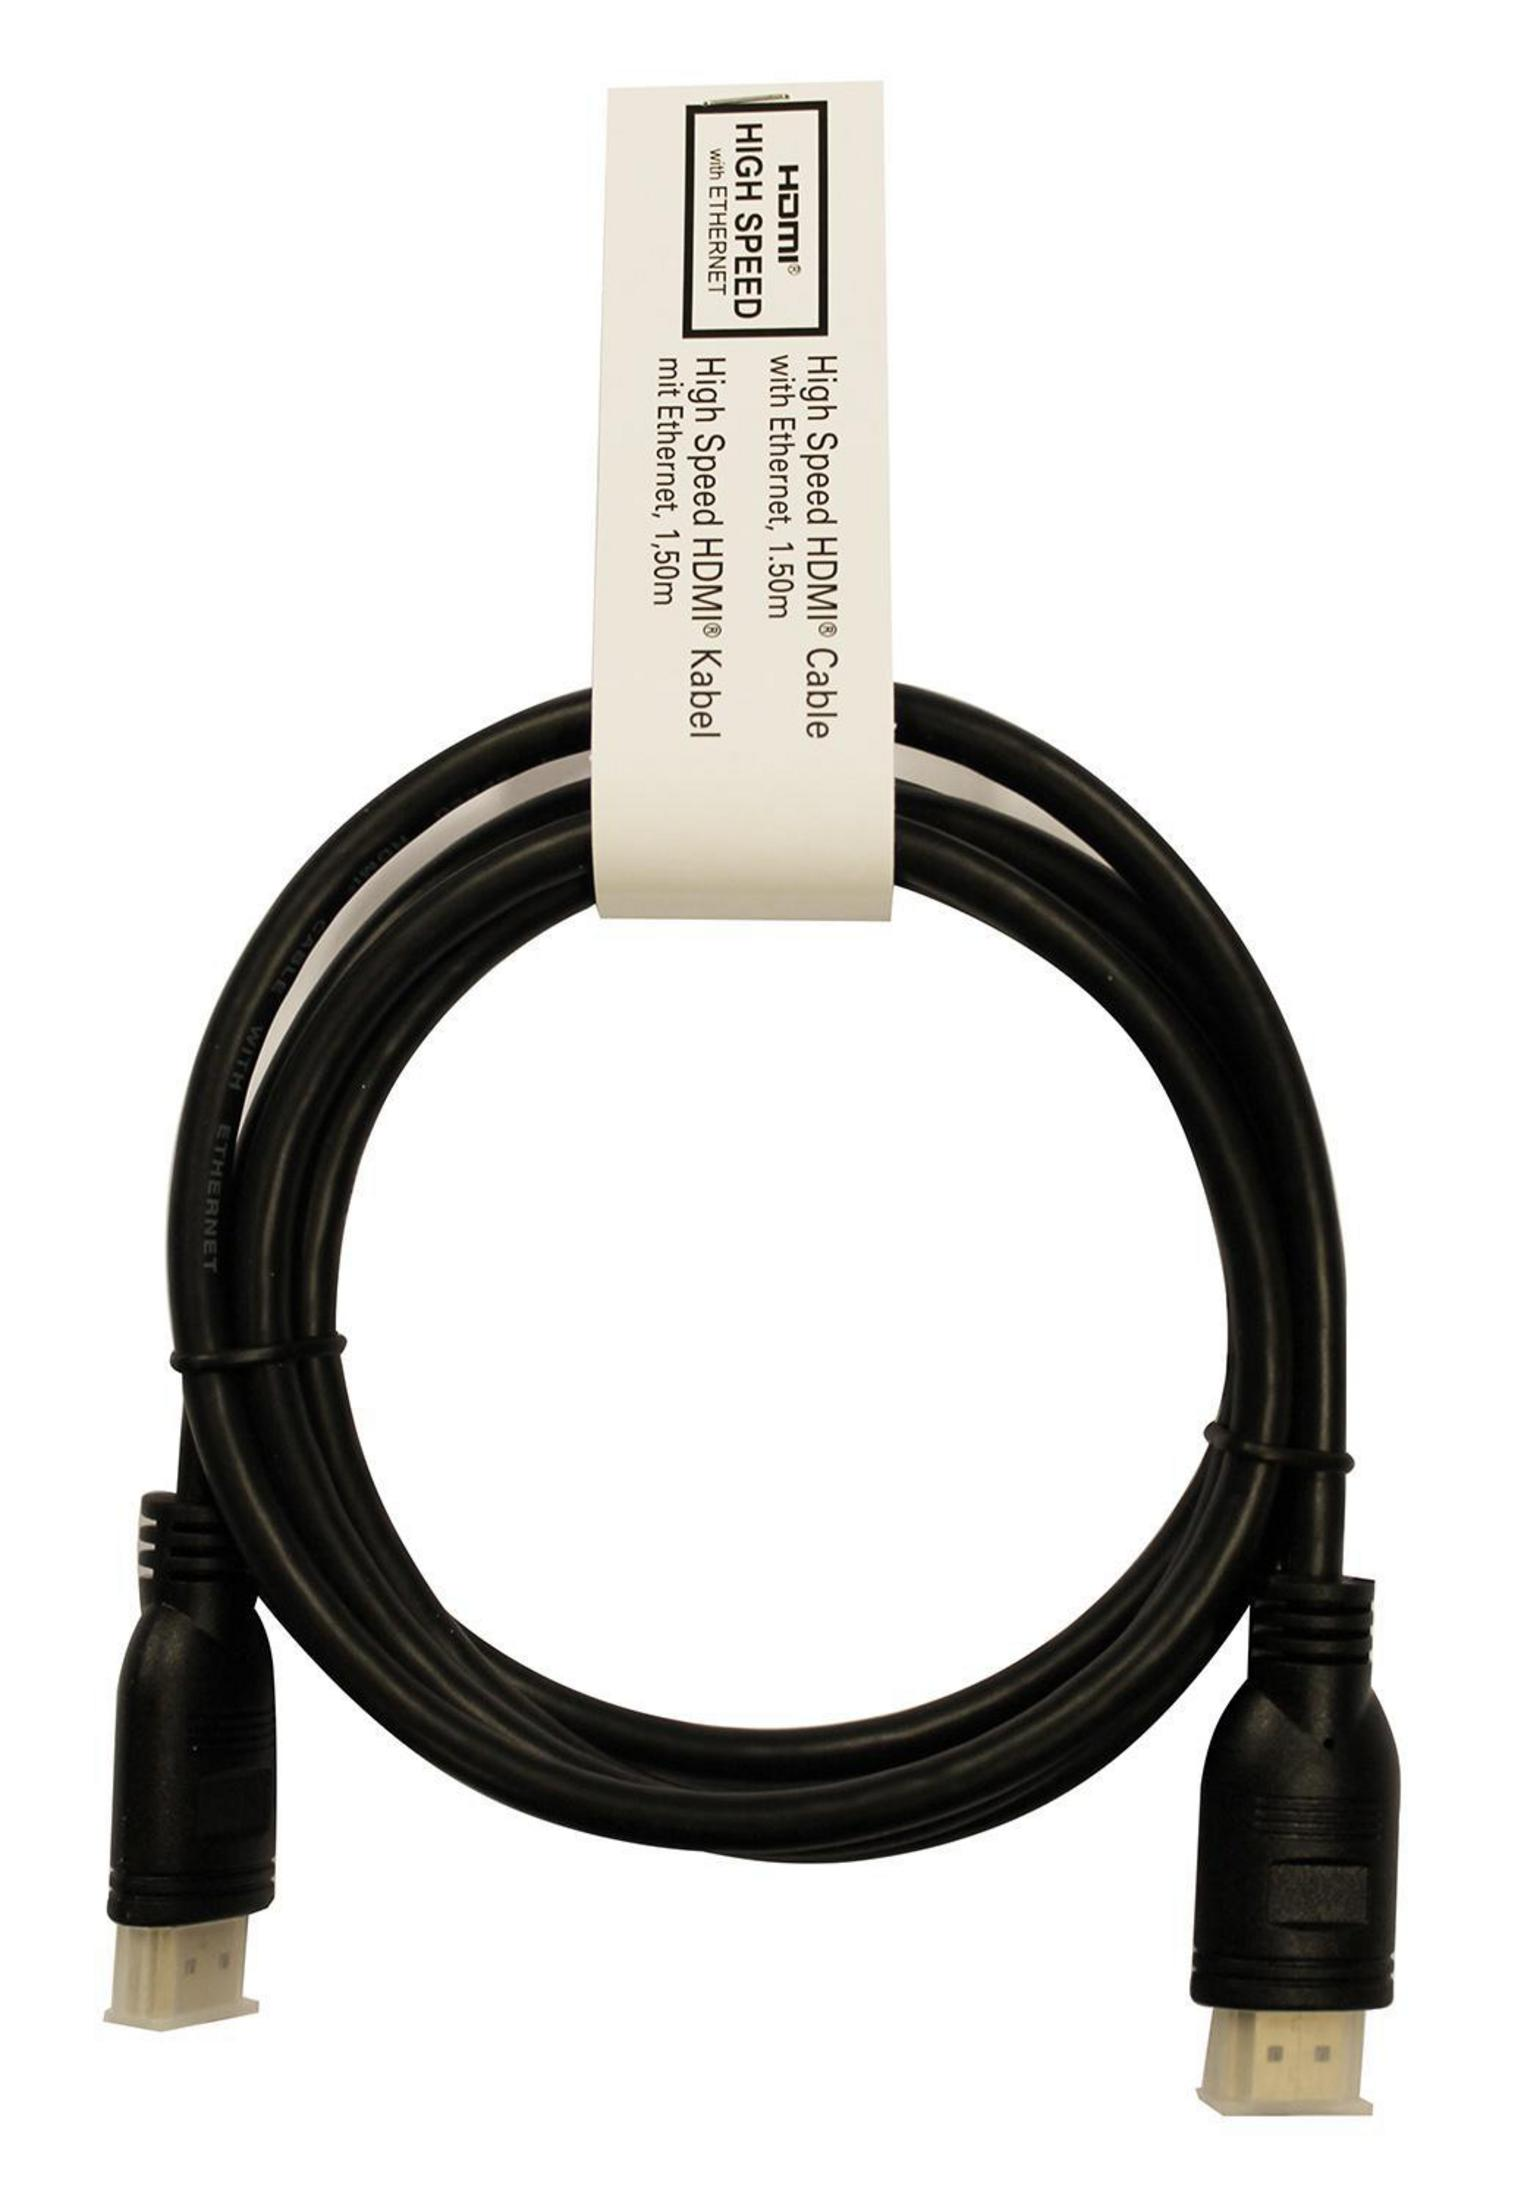 VIVANCO 42923 HDMI Kabel